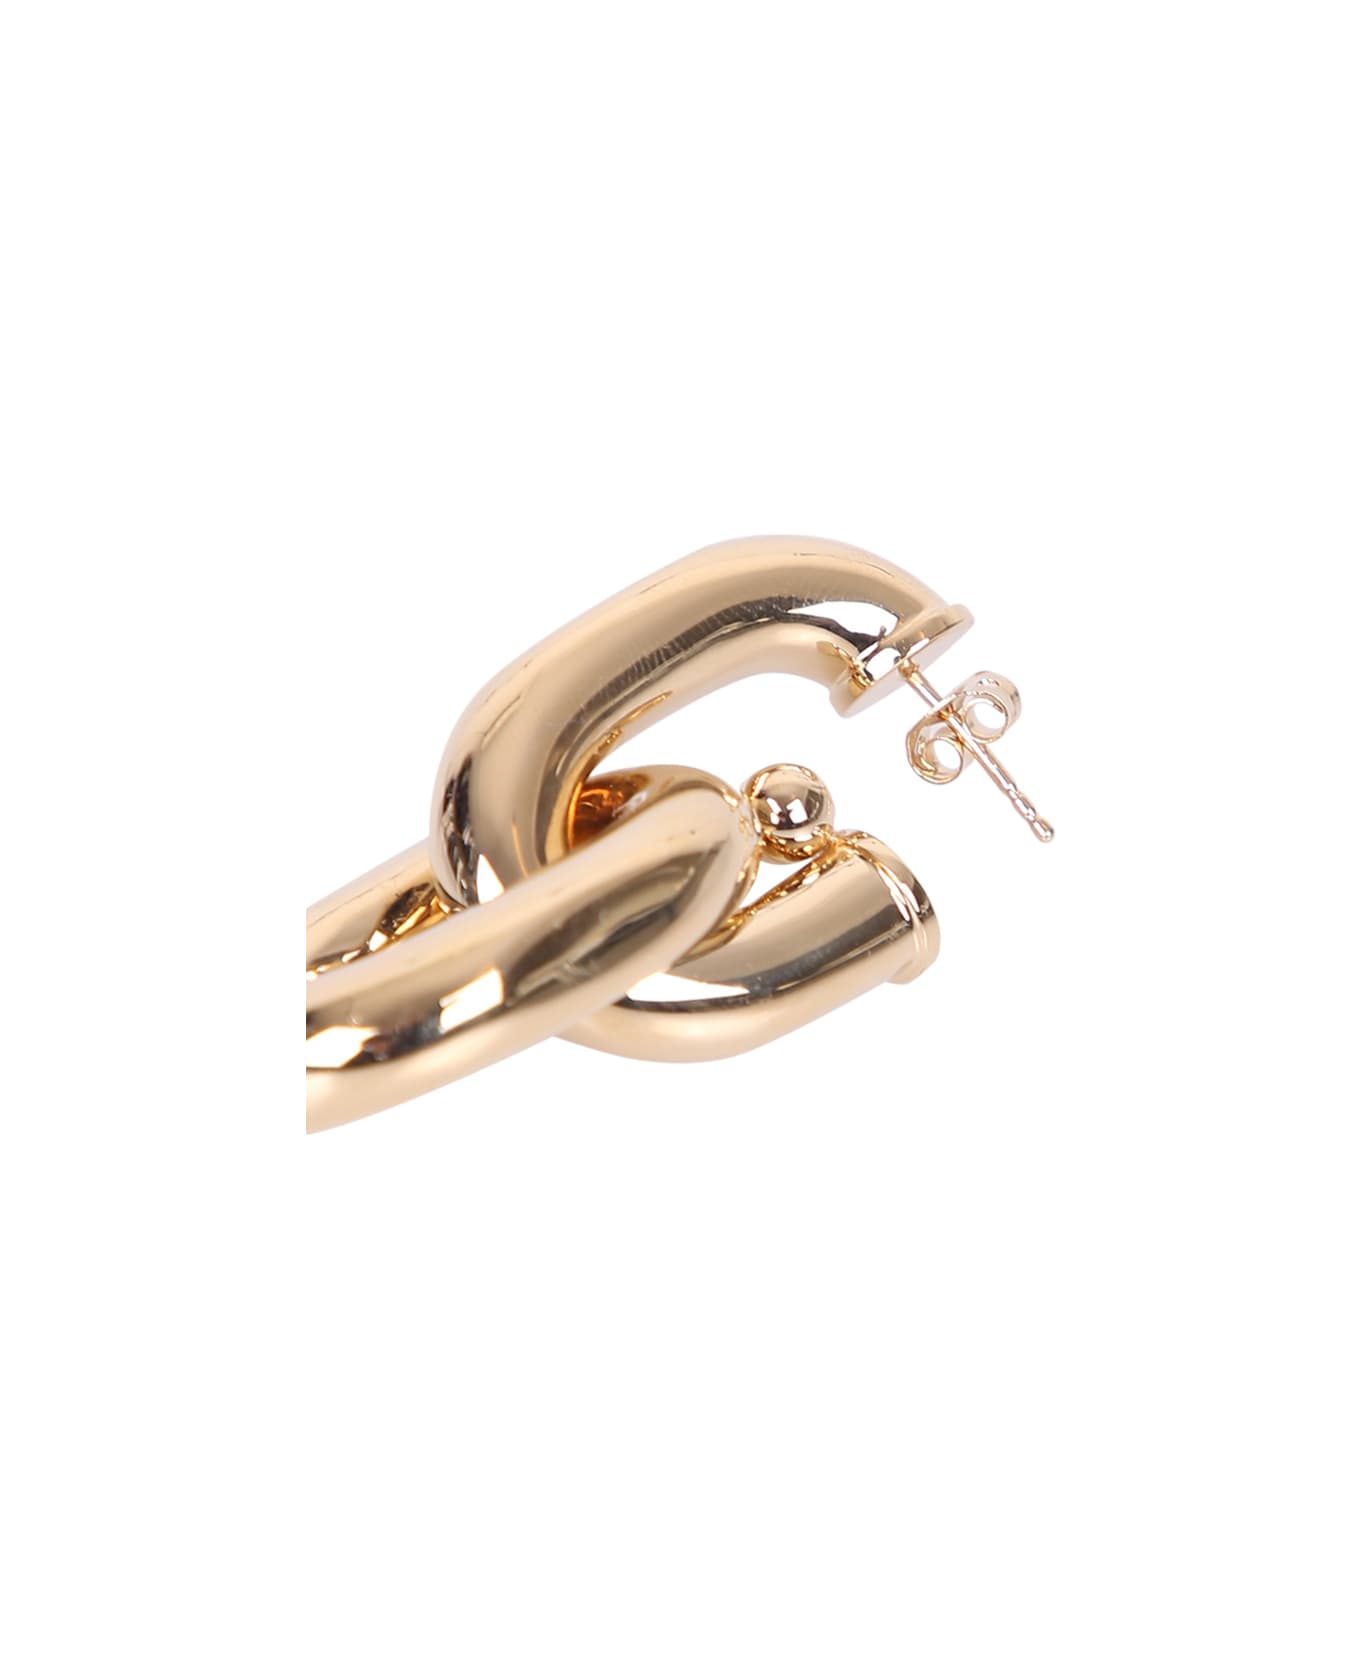 Paco Rabanne Gold Finish Earrings - Metallic